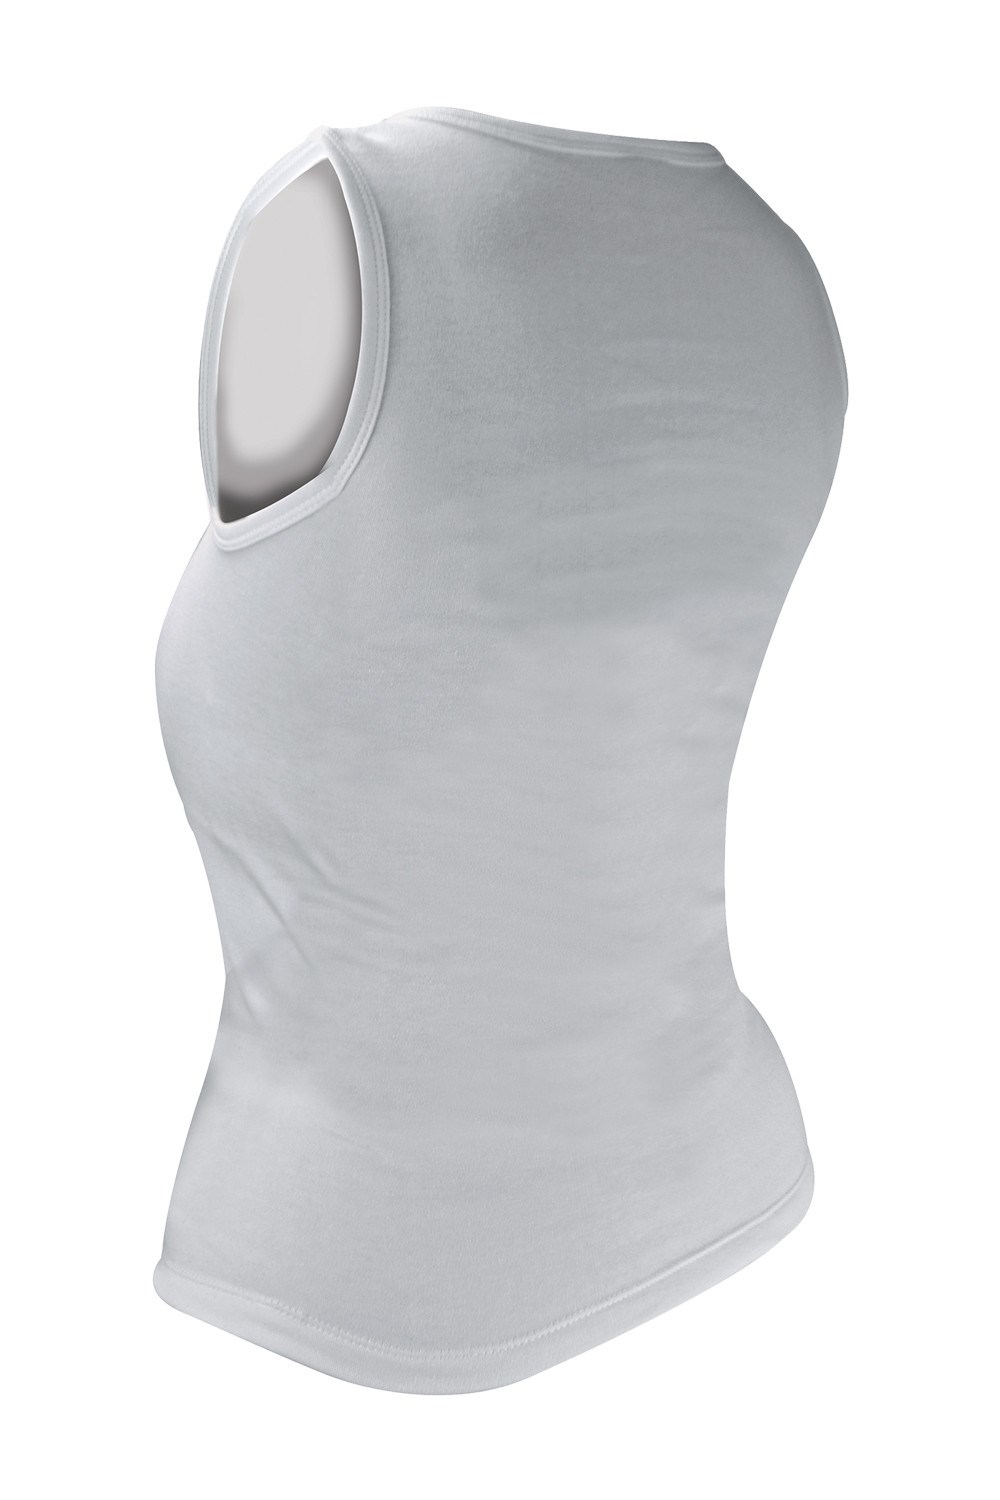 Octave® Womens Thermal Underwear Sleeveless Vest